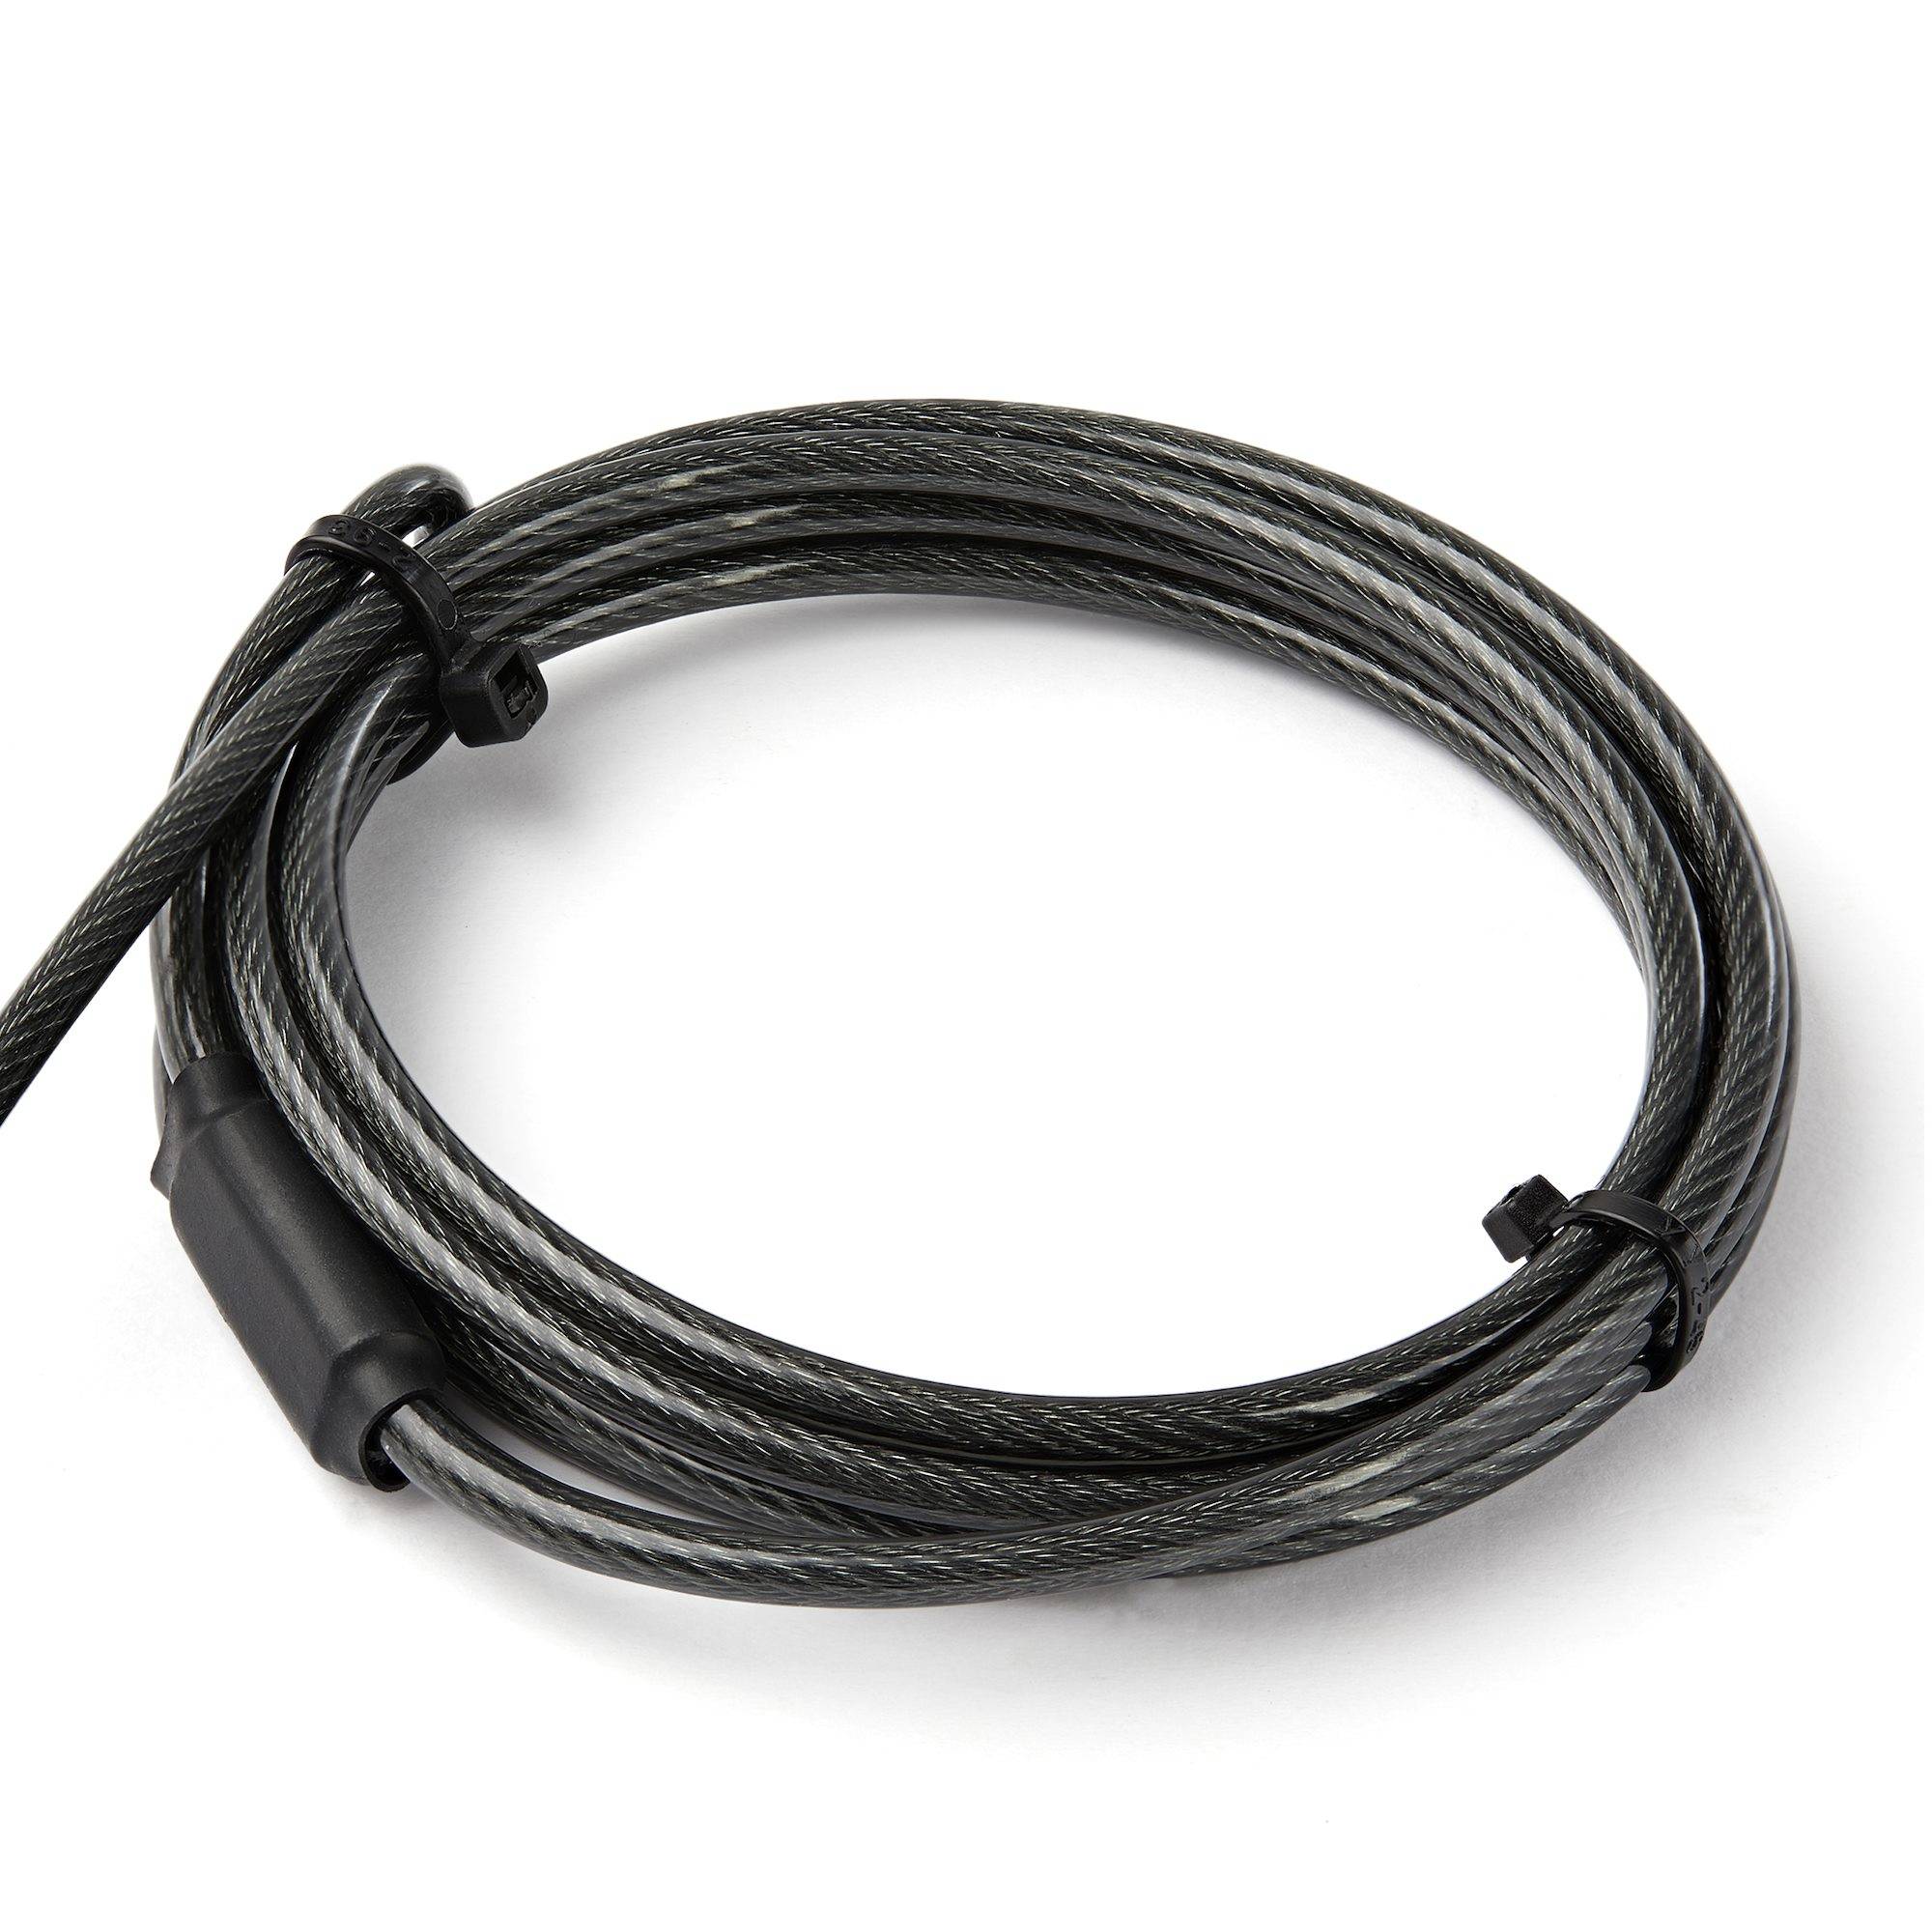 Rca Informatique - image du produit : 2 M (6.6 FT.) LAPTOP CABLE LOCK KEYED - K-SLOT NANO WEDGE